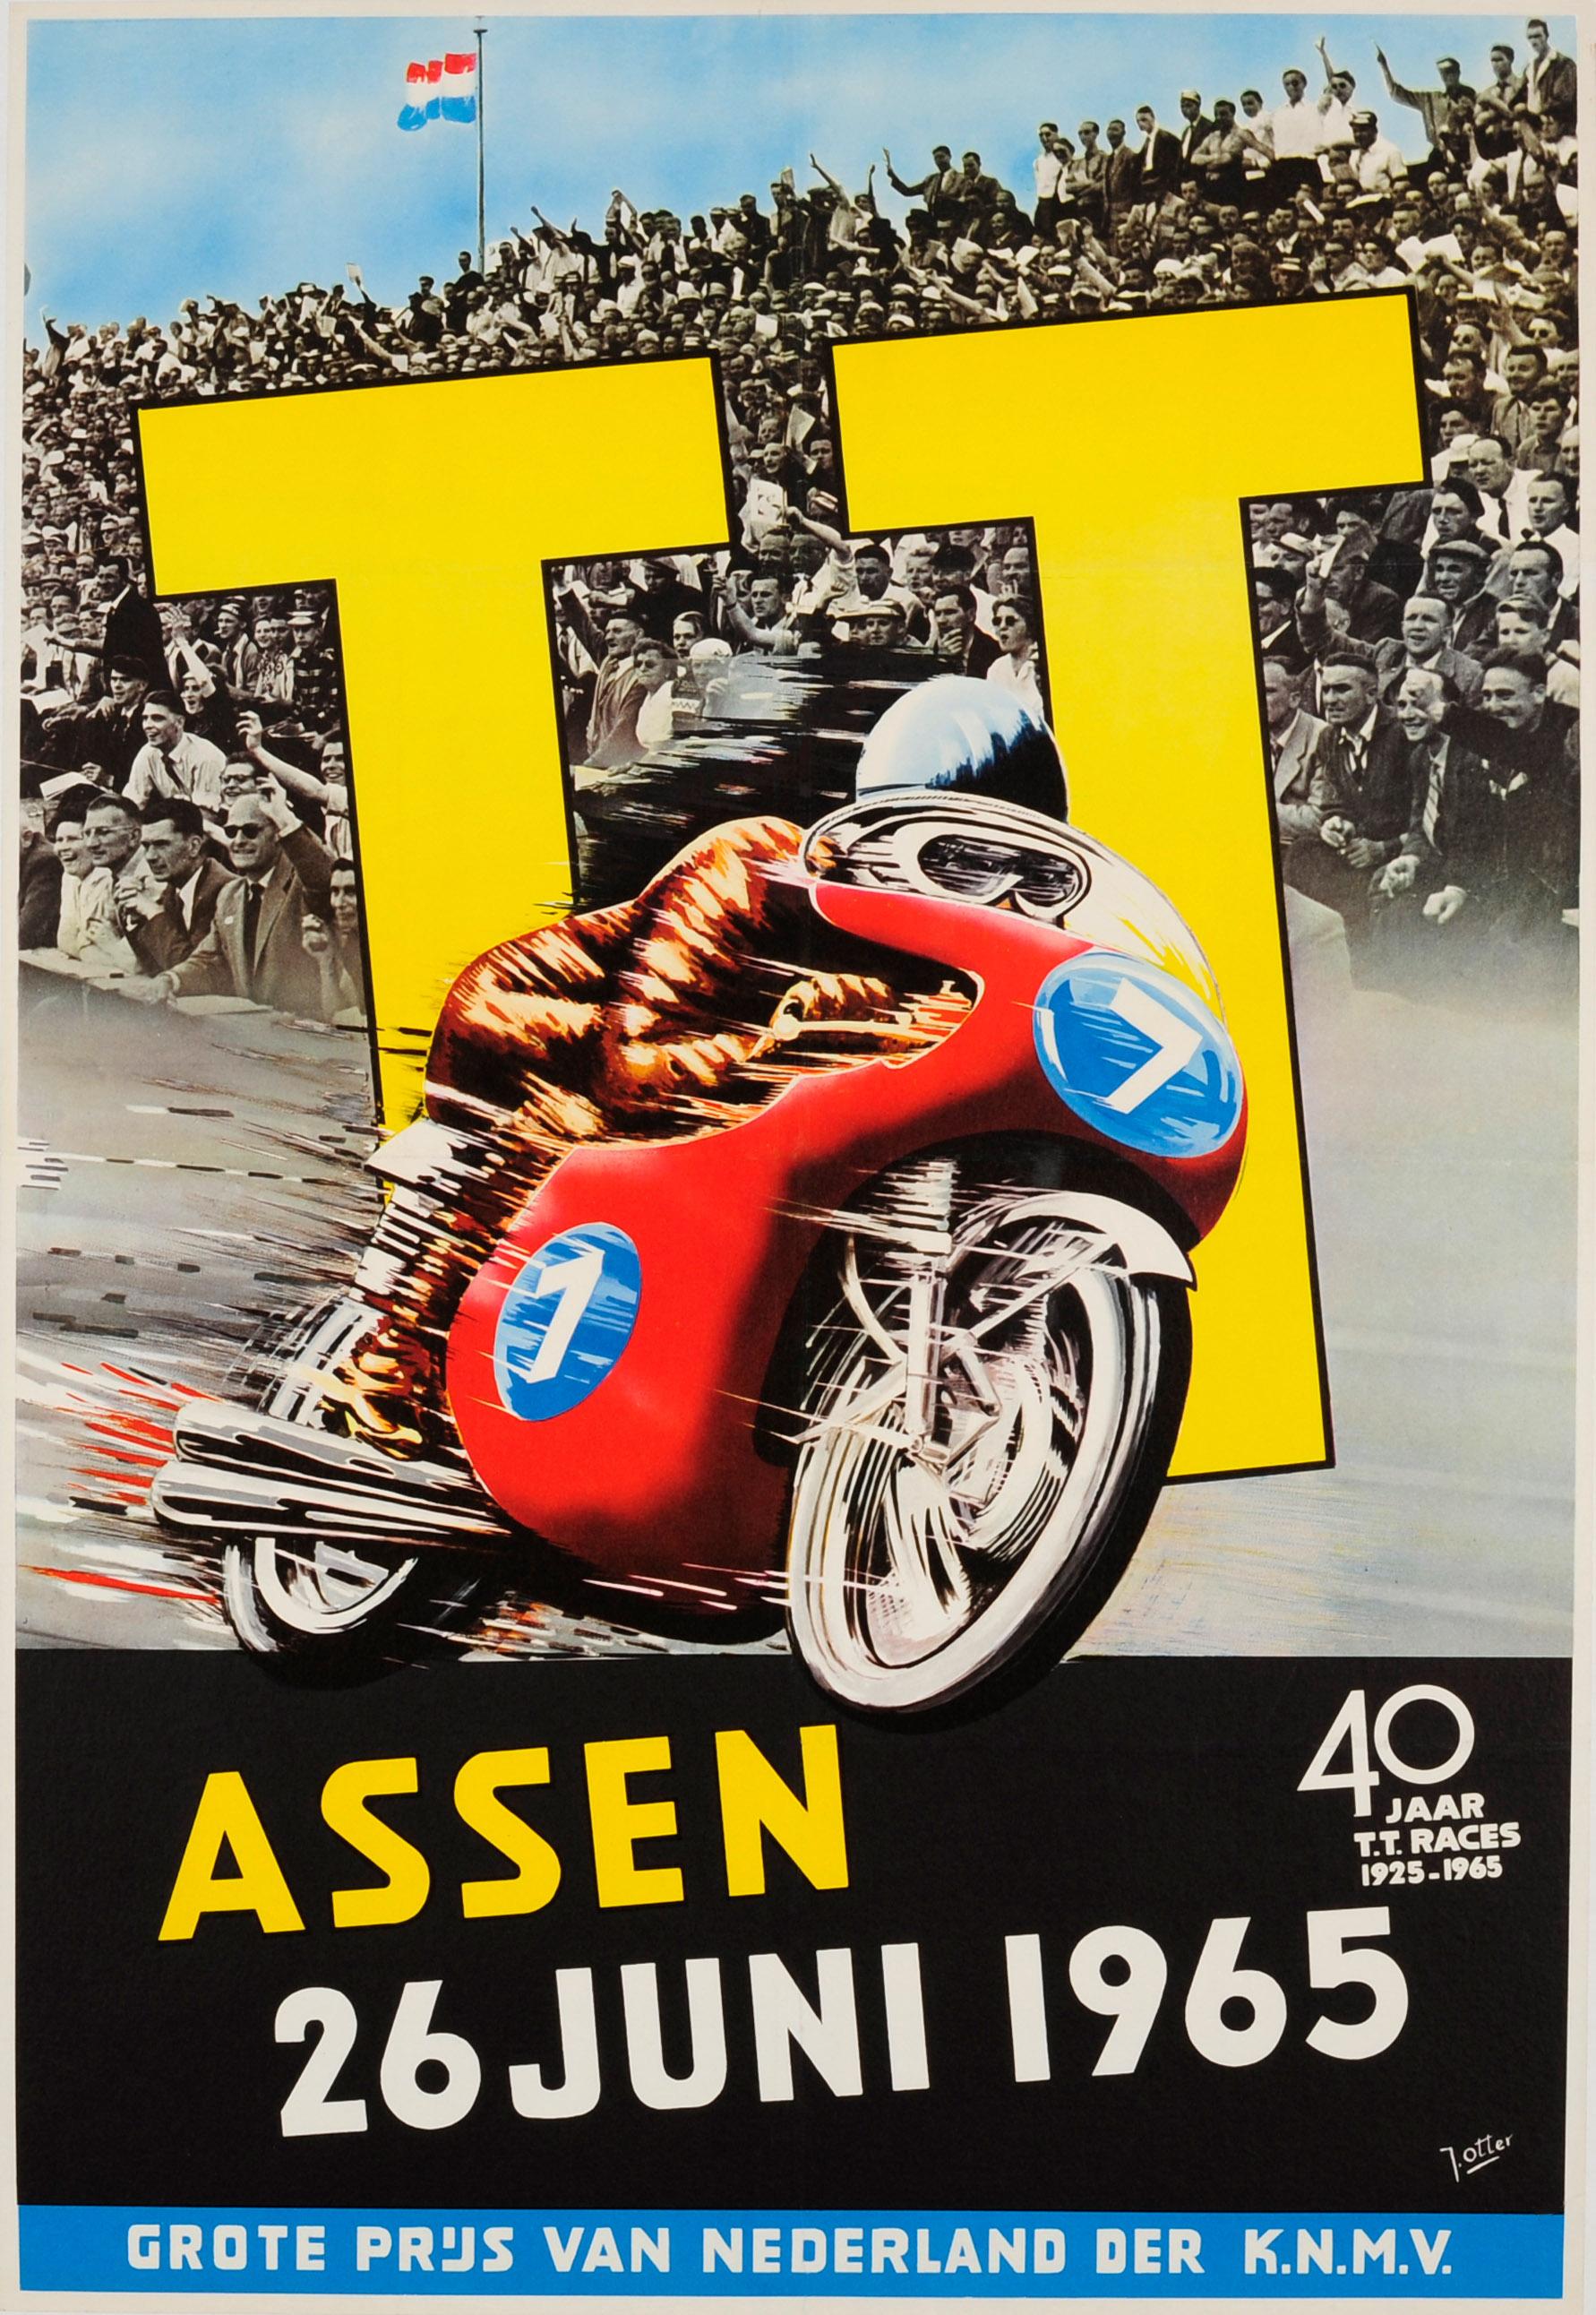 Otter Print - Original Vintage Assen Motorcycle Race Sport Poster 40 Years TT Races 1925-1965